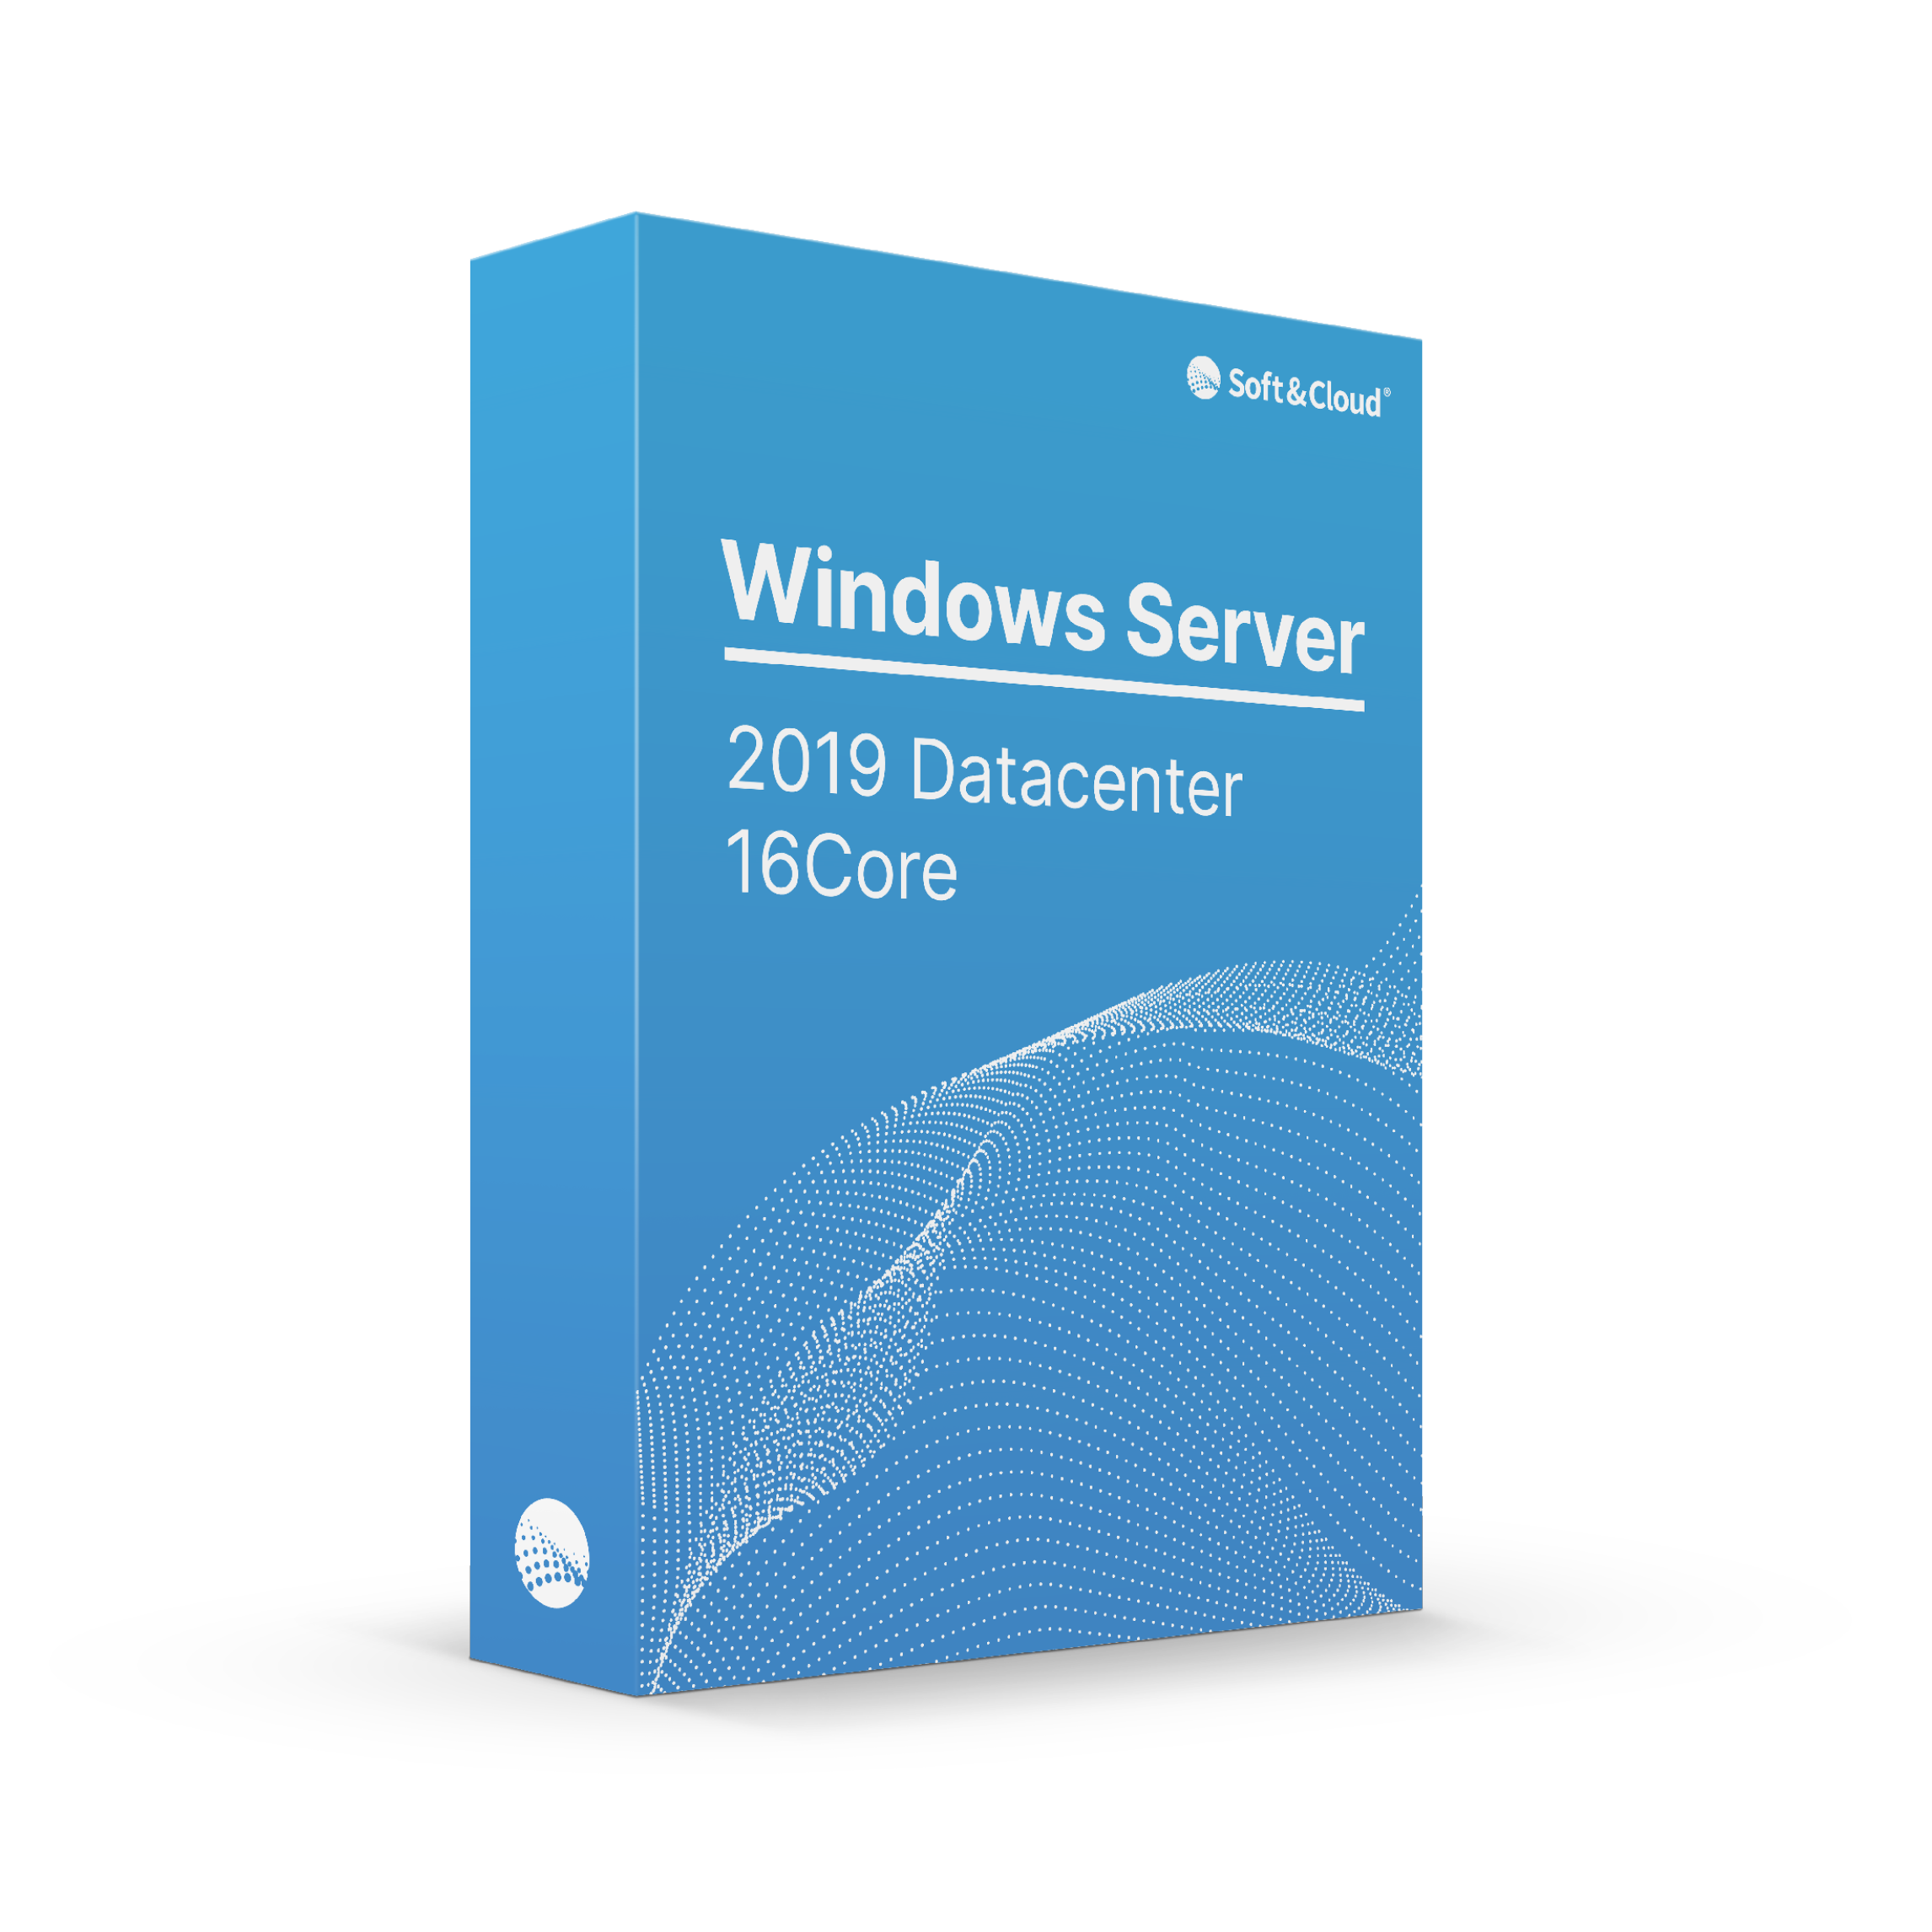 Windows Server 2019 Datacenter 16Core